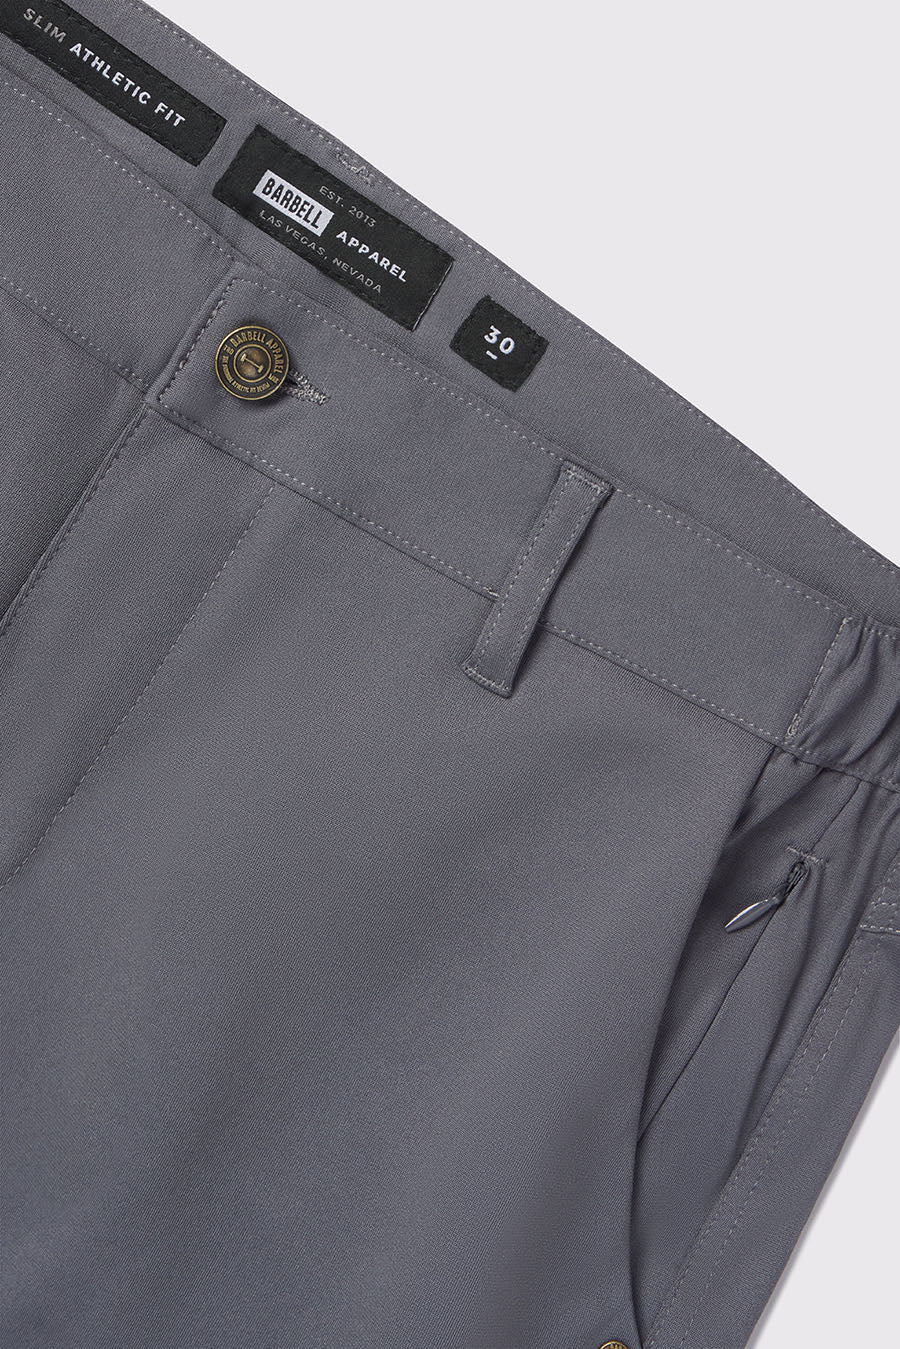 NWT State & Liberty Athletic Fit Stretch Suit Pants Light Khaki Size 38 |  eBay